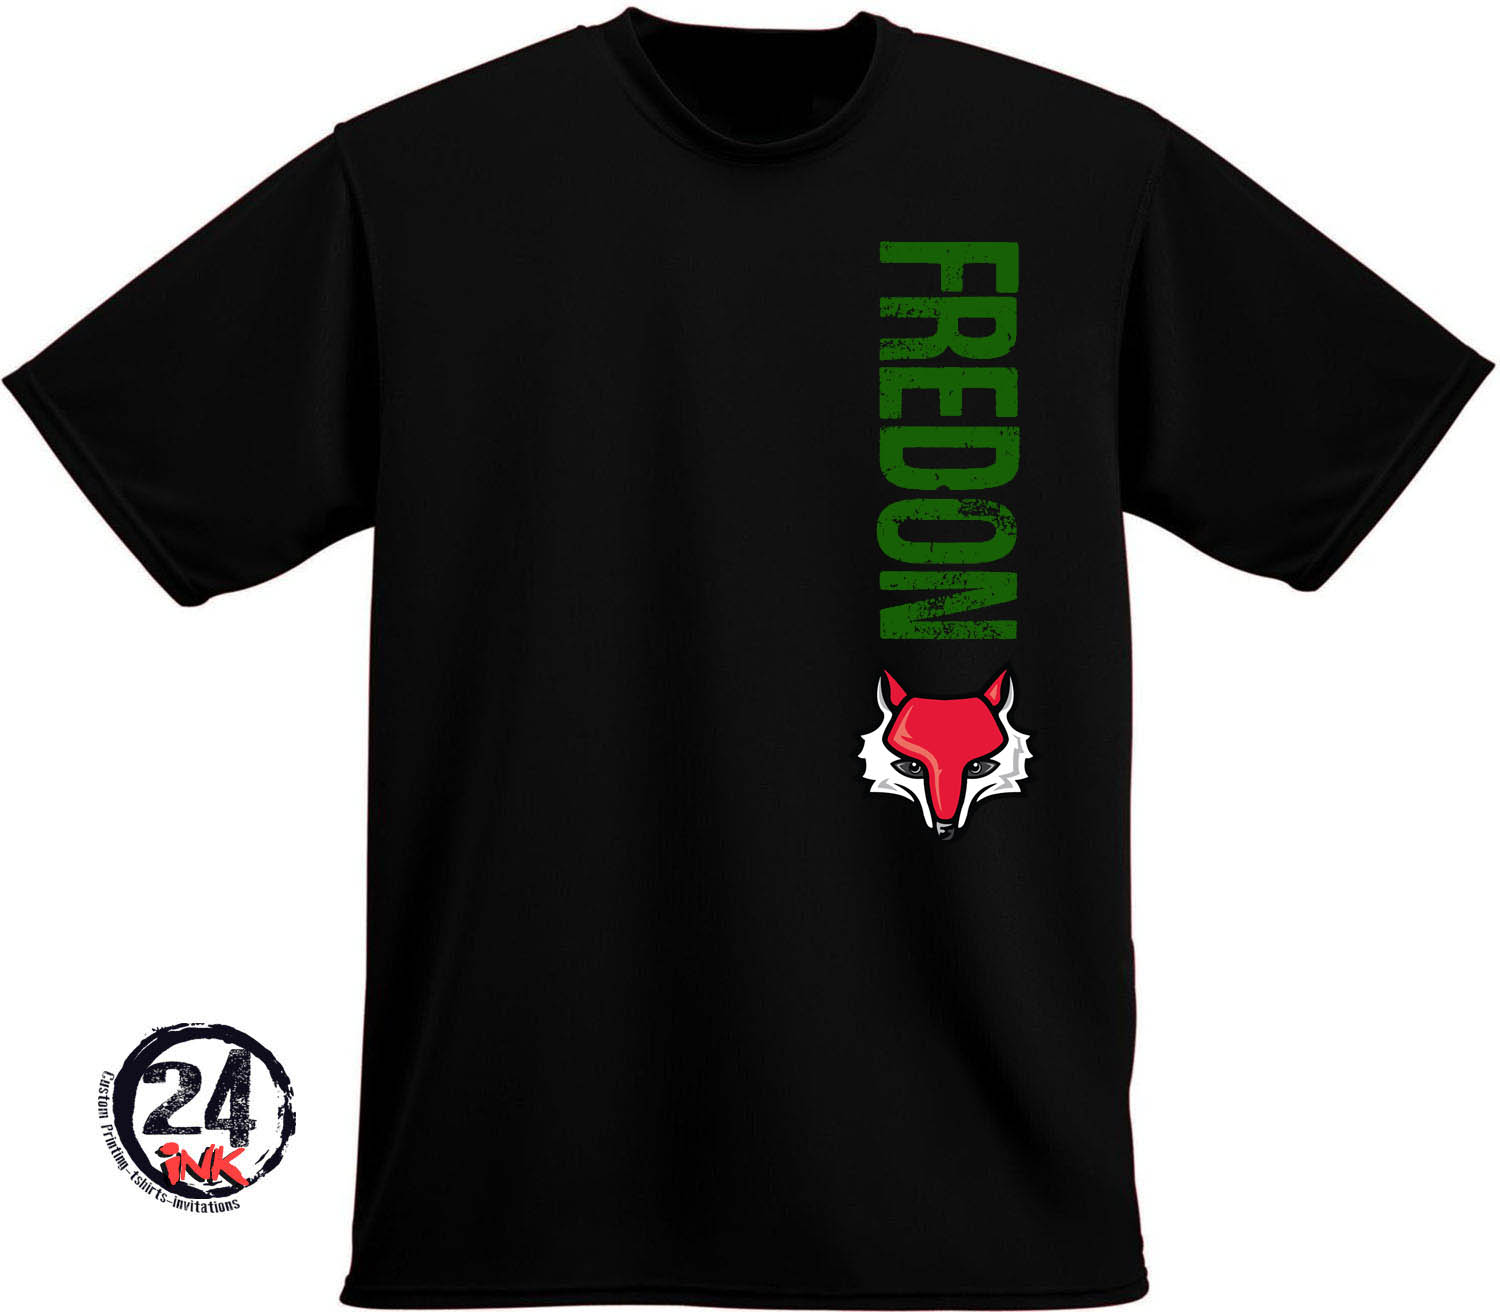 Fredon Design 4 T-Shirt